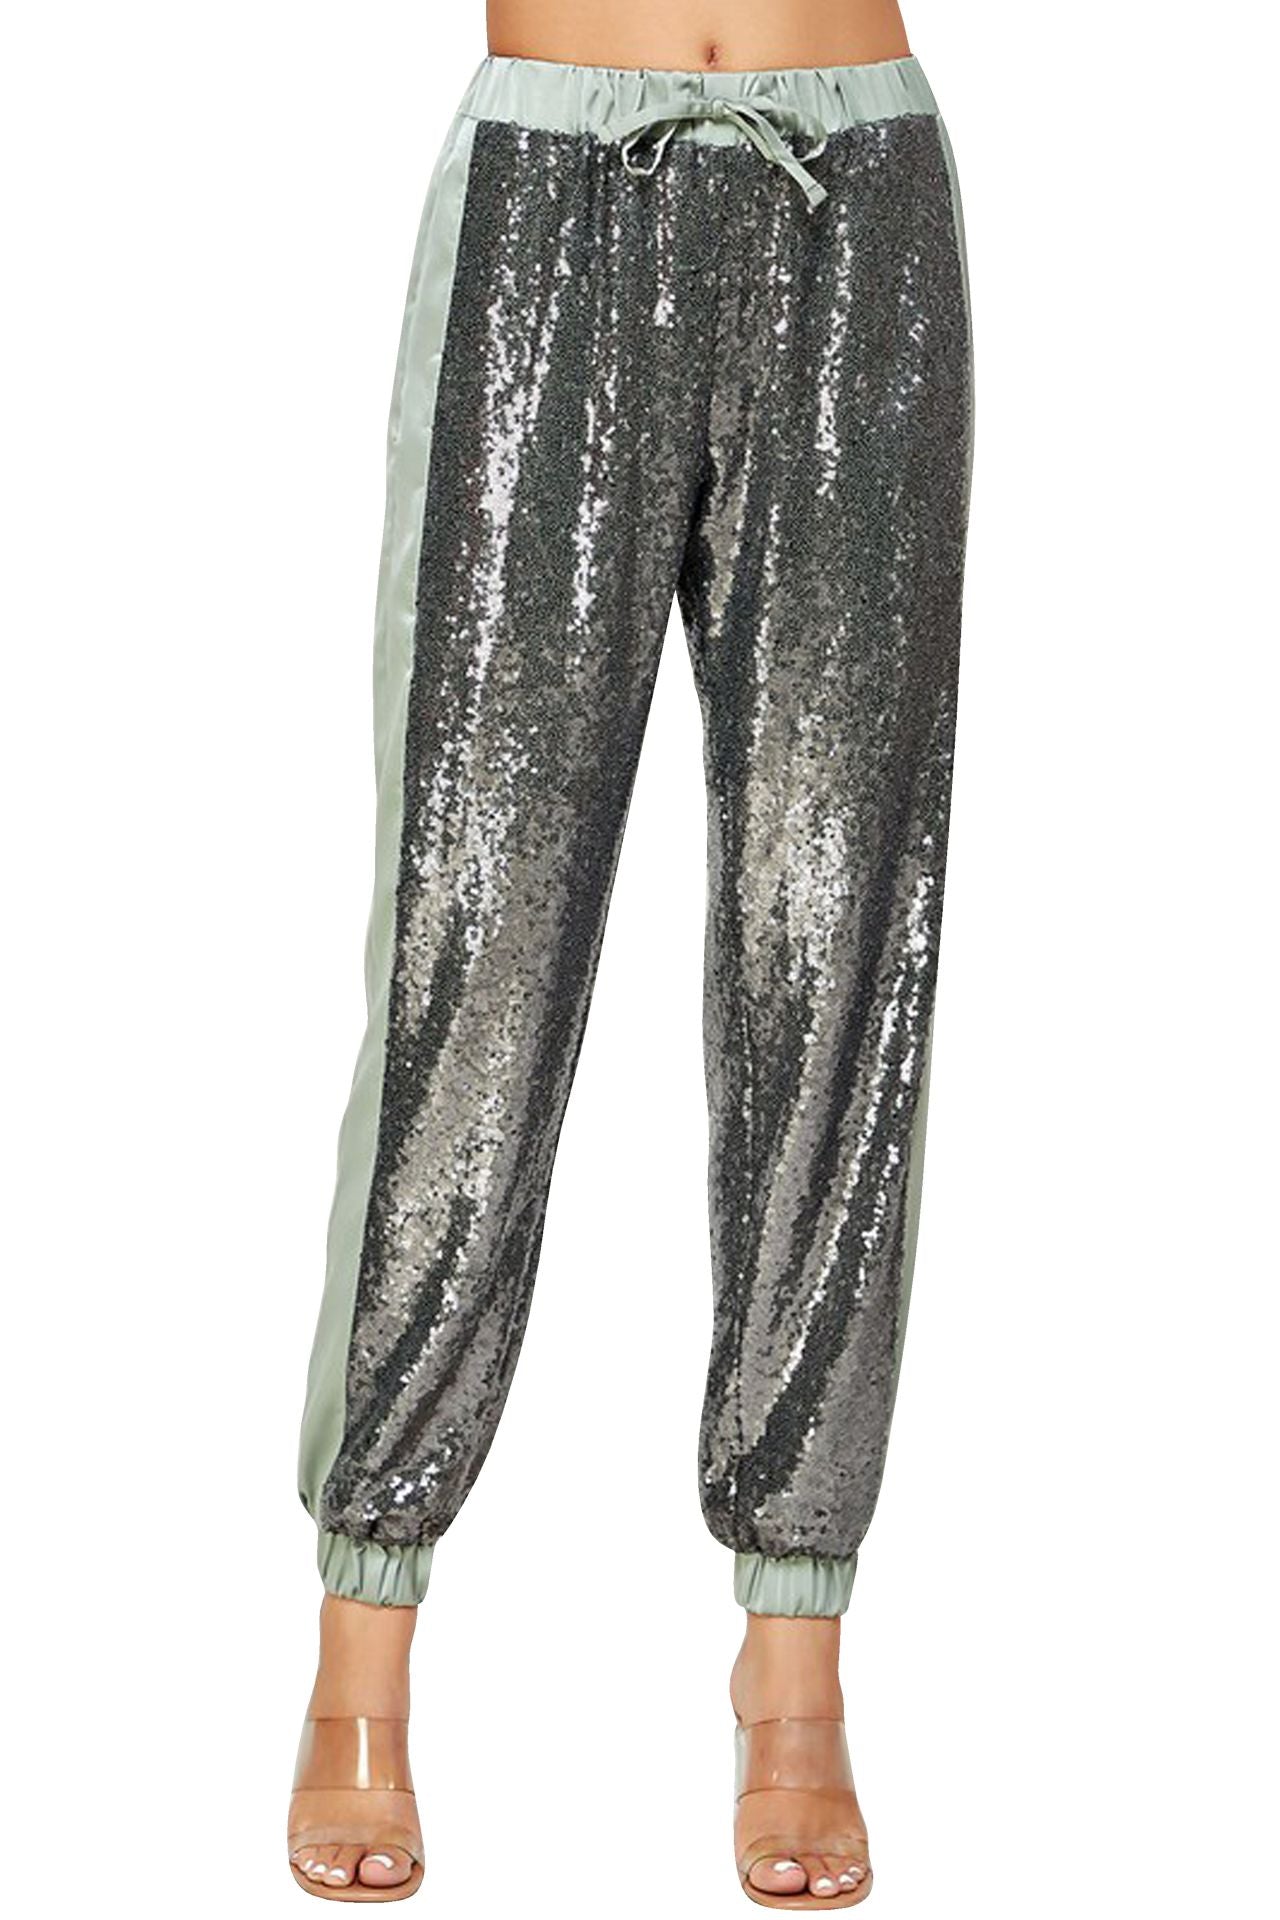 "silver sweat pants" "sequin jogger pants women" "sequin jogger pants" "Kyle X Shahida" 